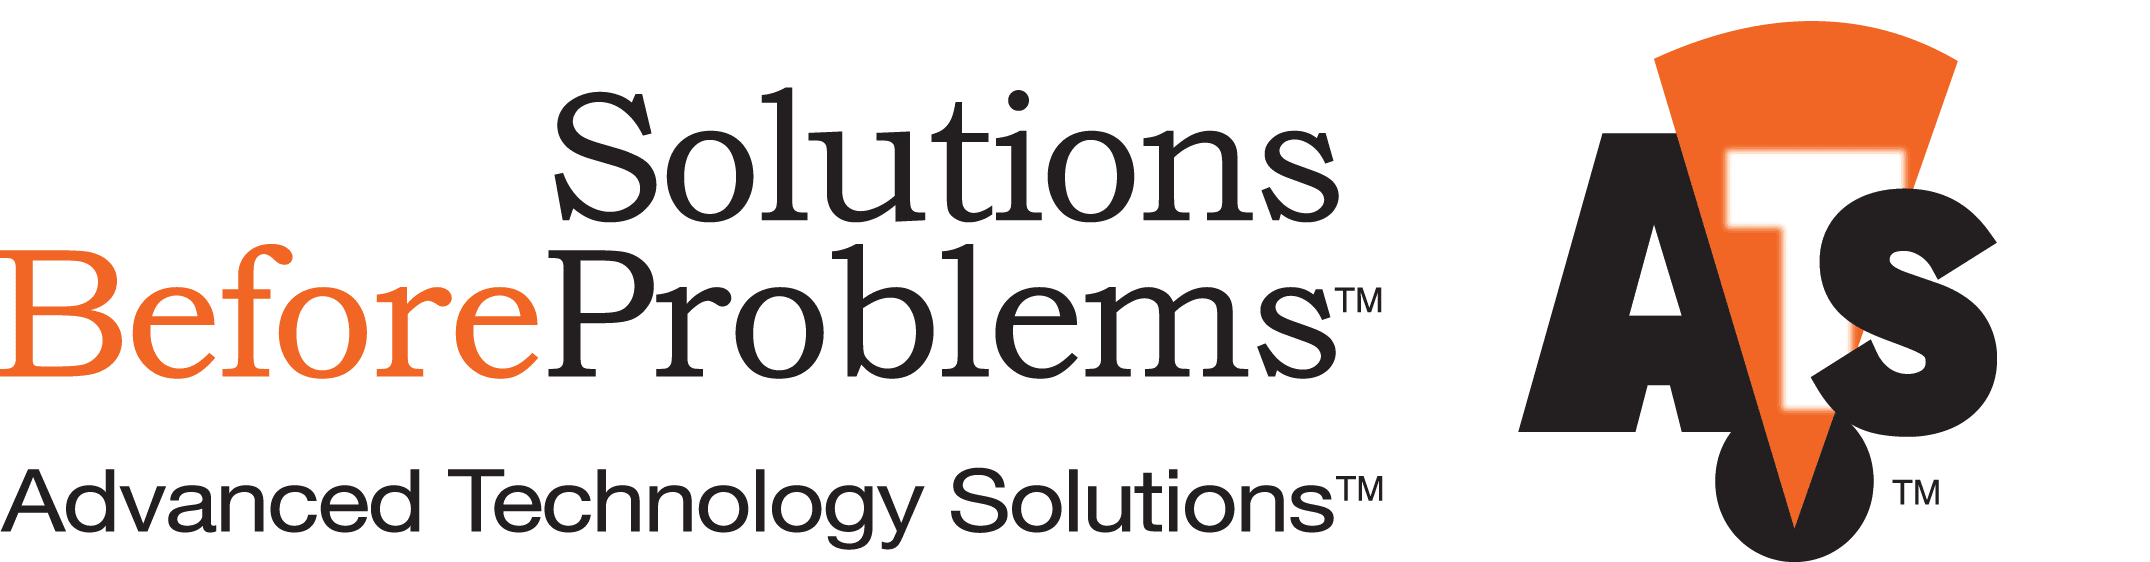 Advanced Technology Solutions, Inc. logo